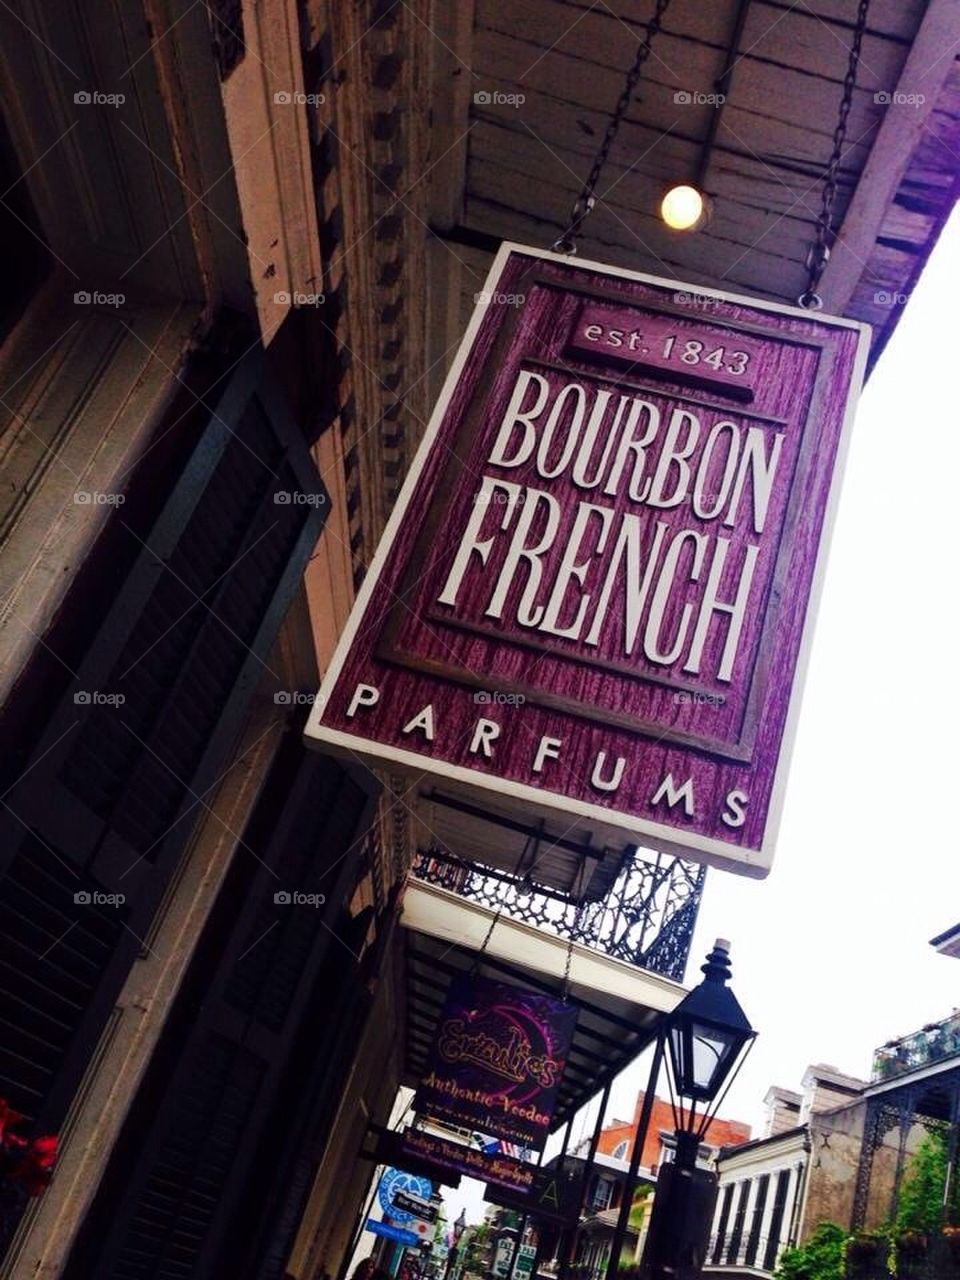 Bourbon French 